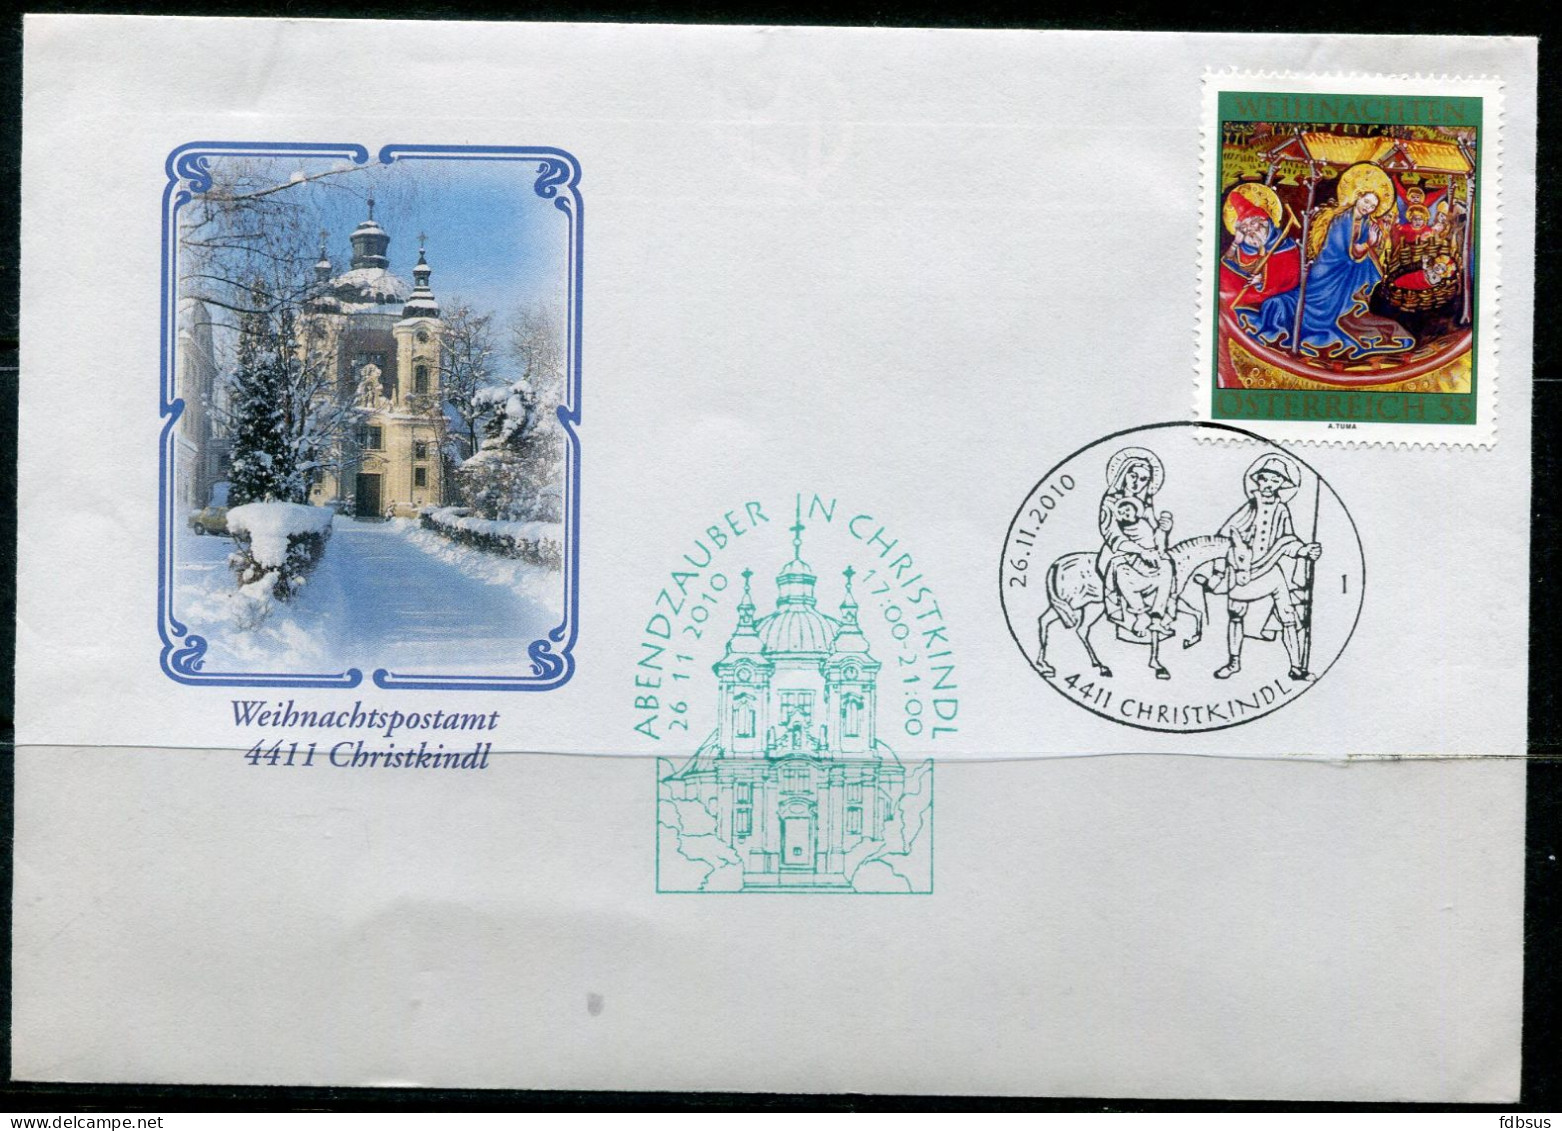 26-11-2010 Christkindl Cover Noel Christmas Navidad Weihnachten - See Sonderstempel And Briefmarken - - Briefe U. Dokumente